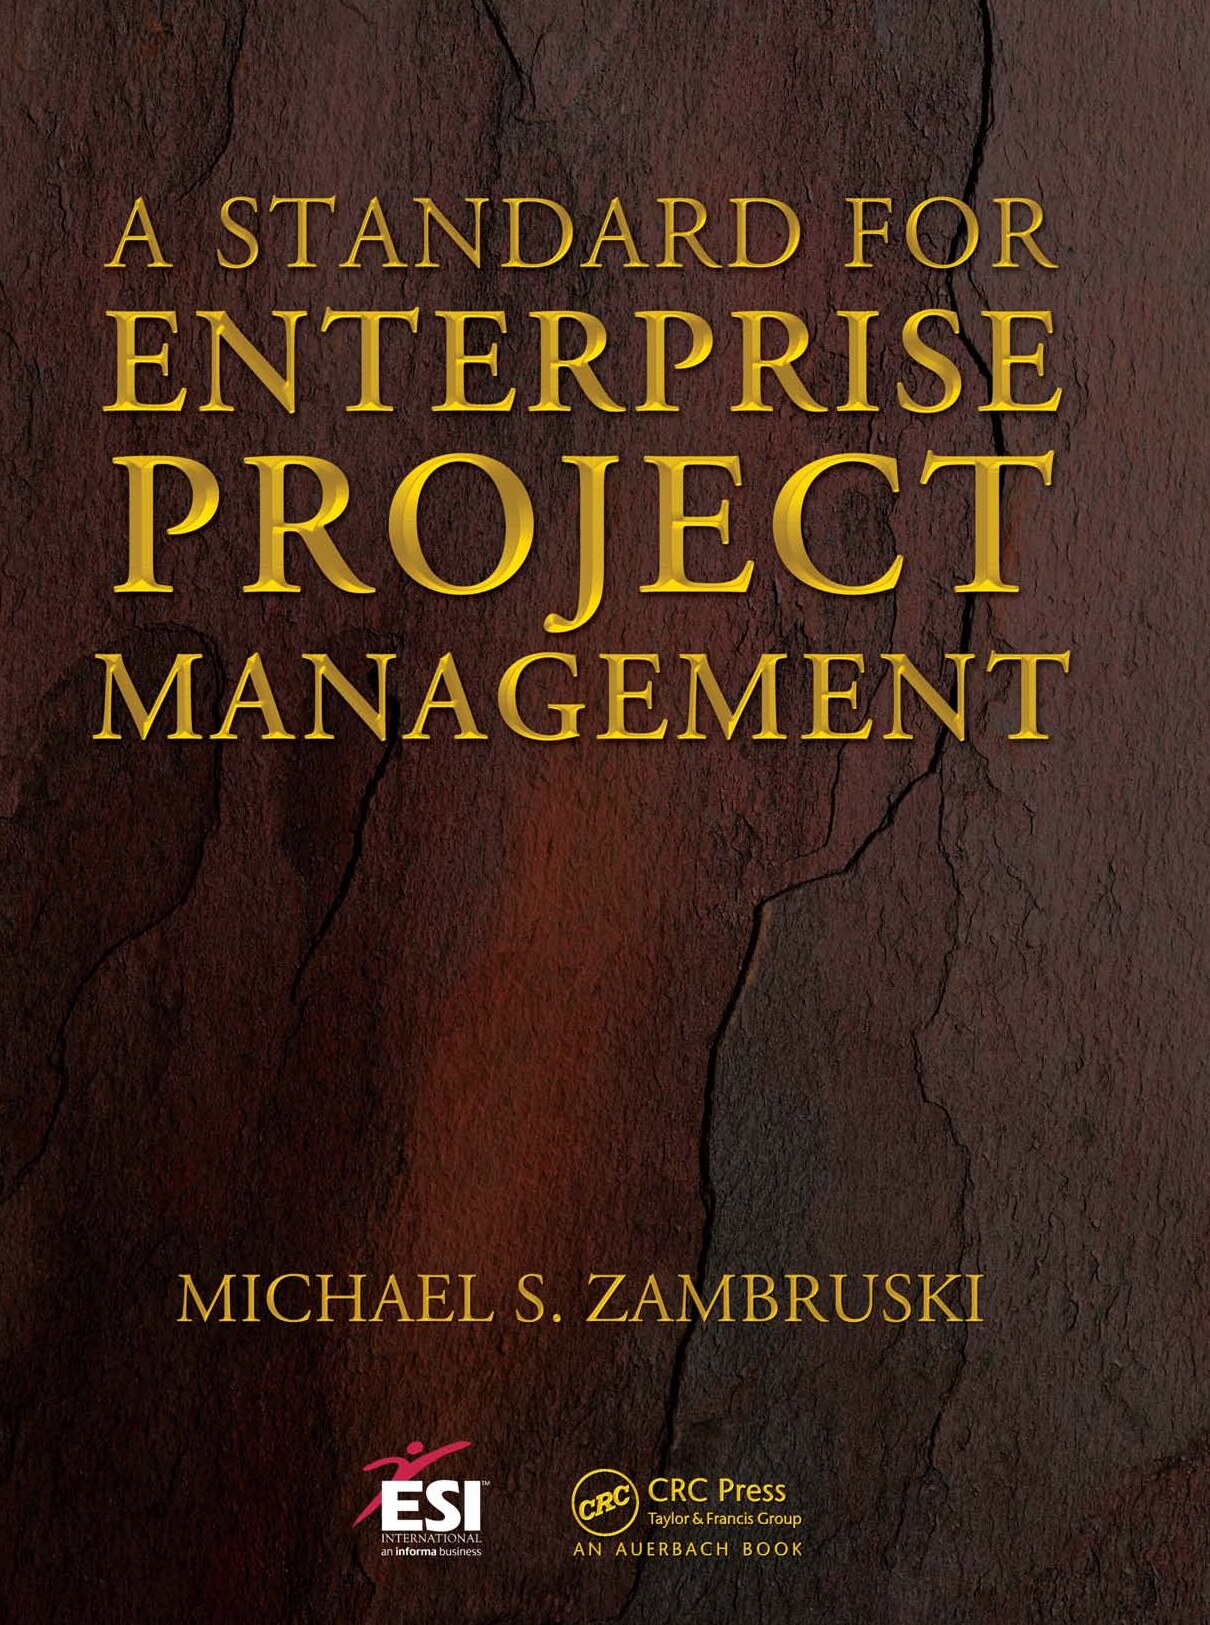 A Standard for Enterprise Project Management - M. Zambruski (CRC, 2009)